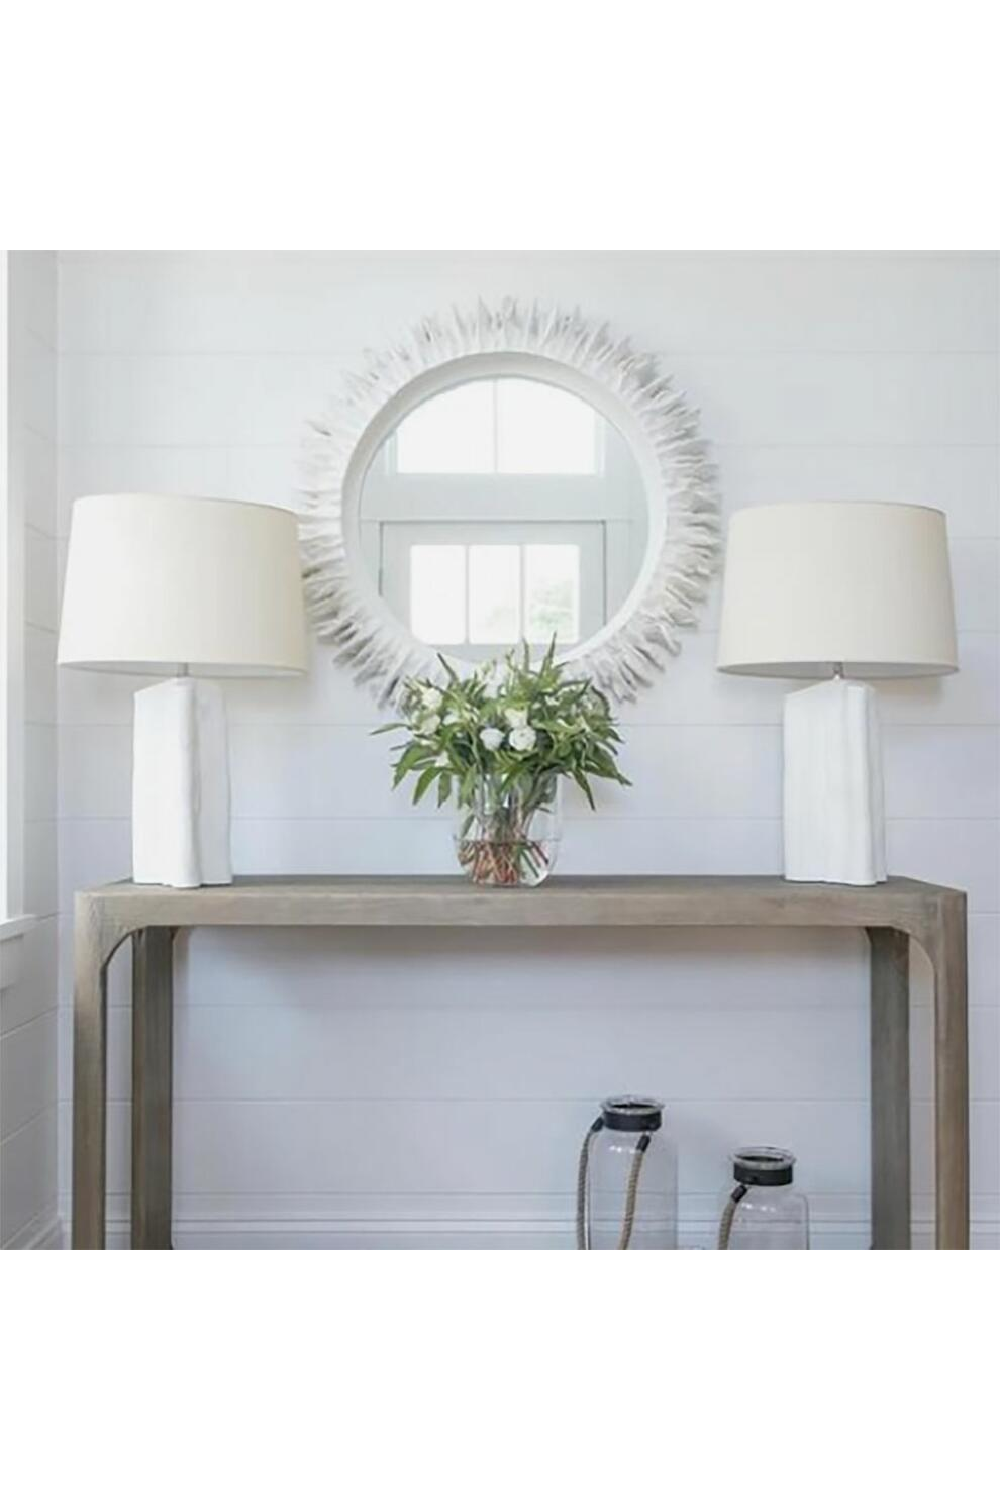 Wood Base Table Lamp | Andrew Martin Sierra | OROA.com